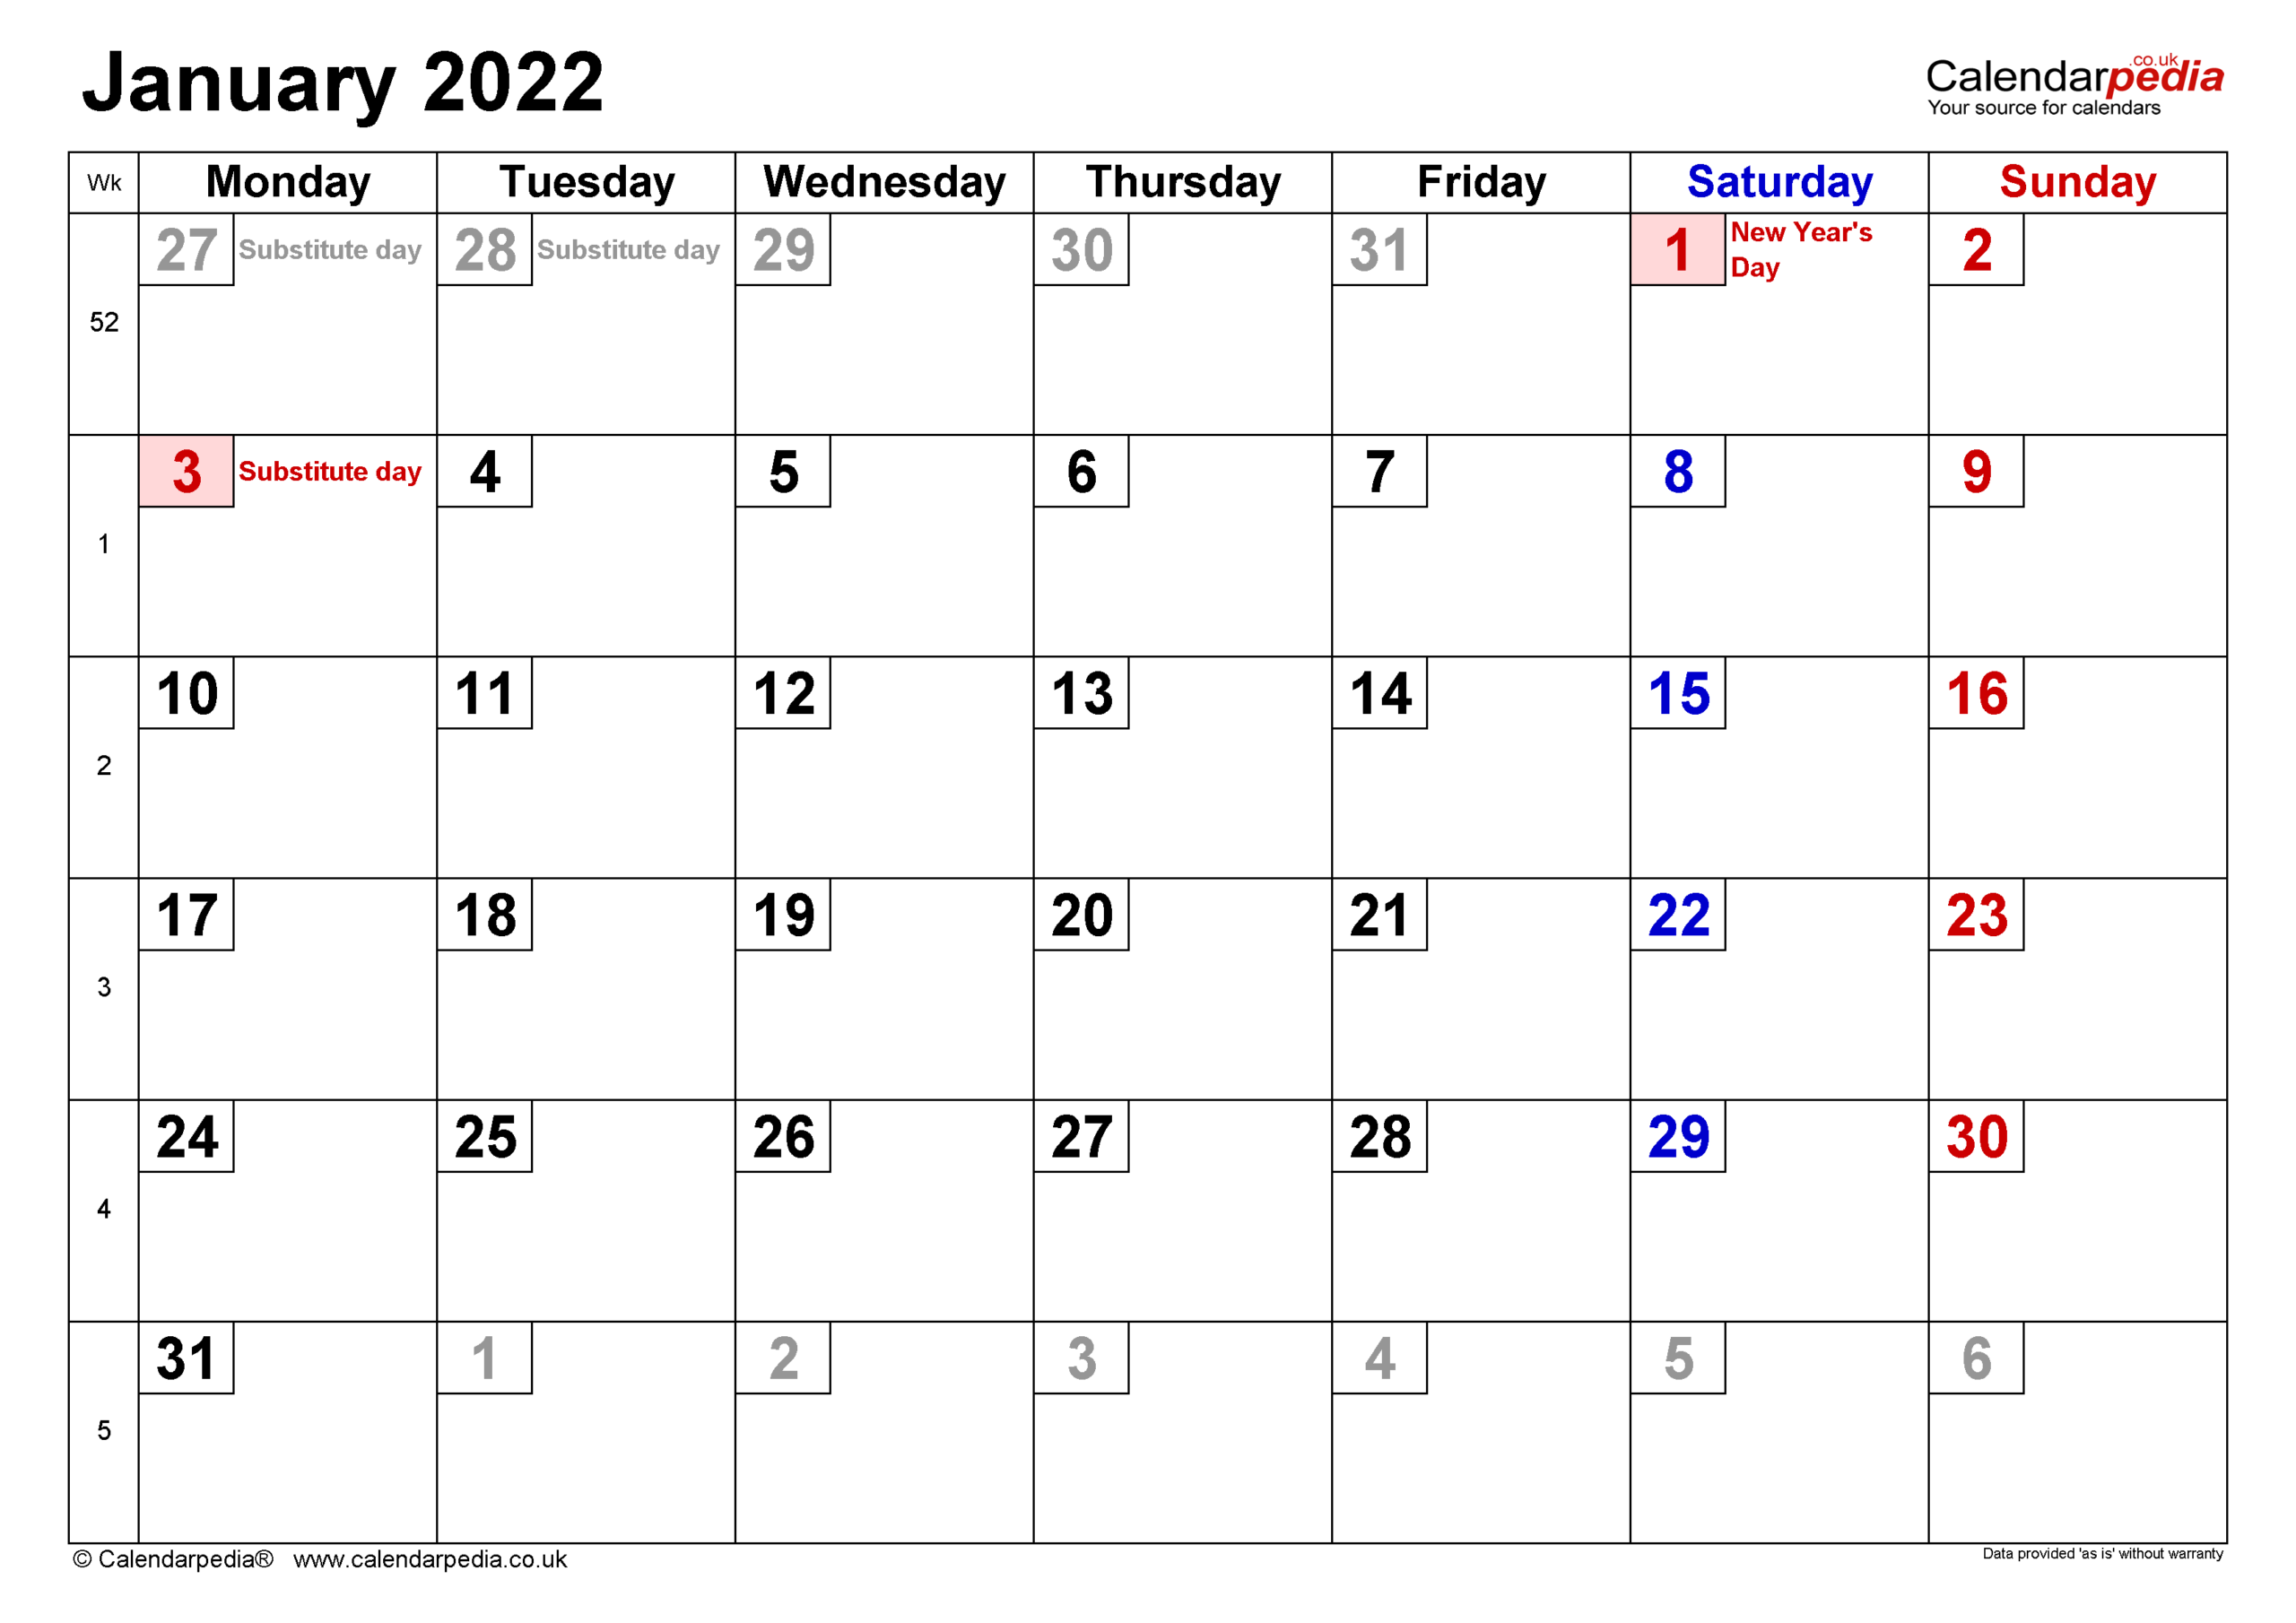 Get Calendar In January 2022